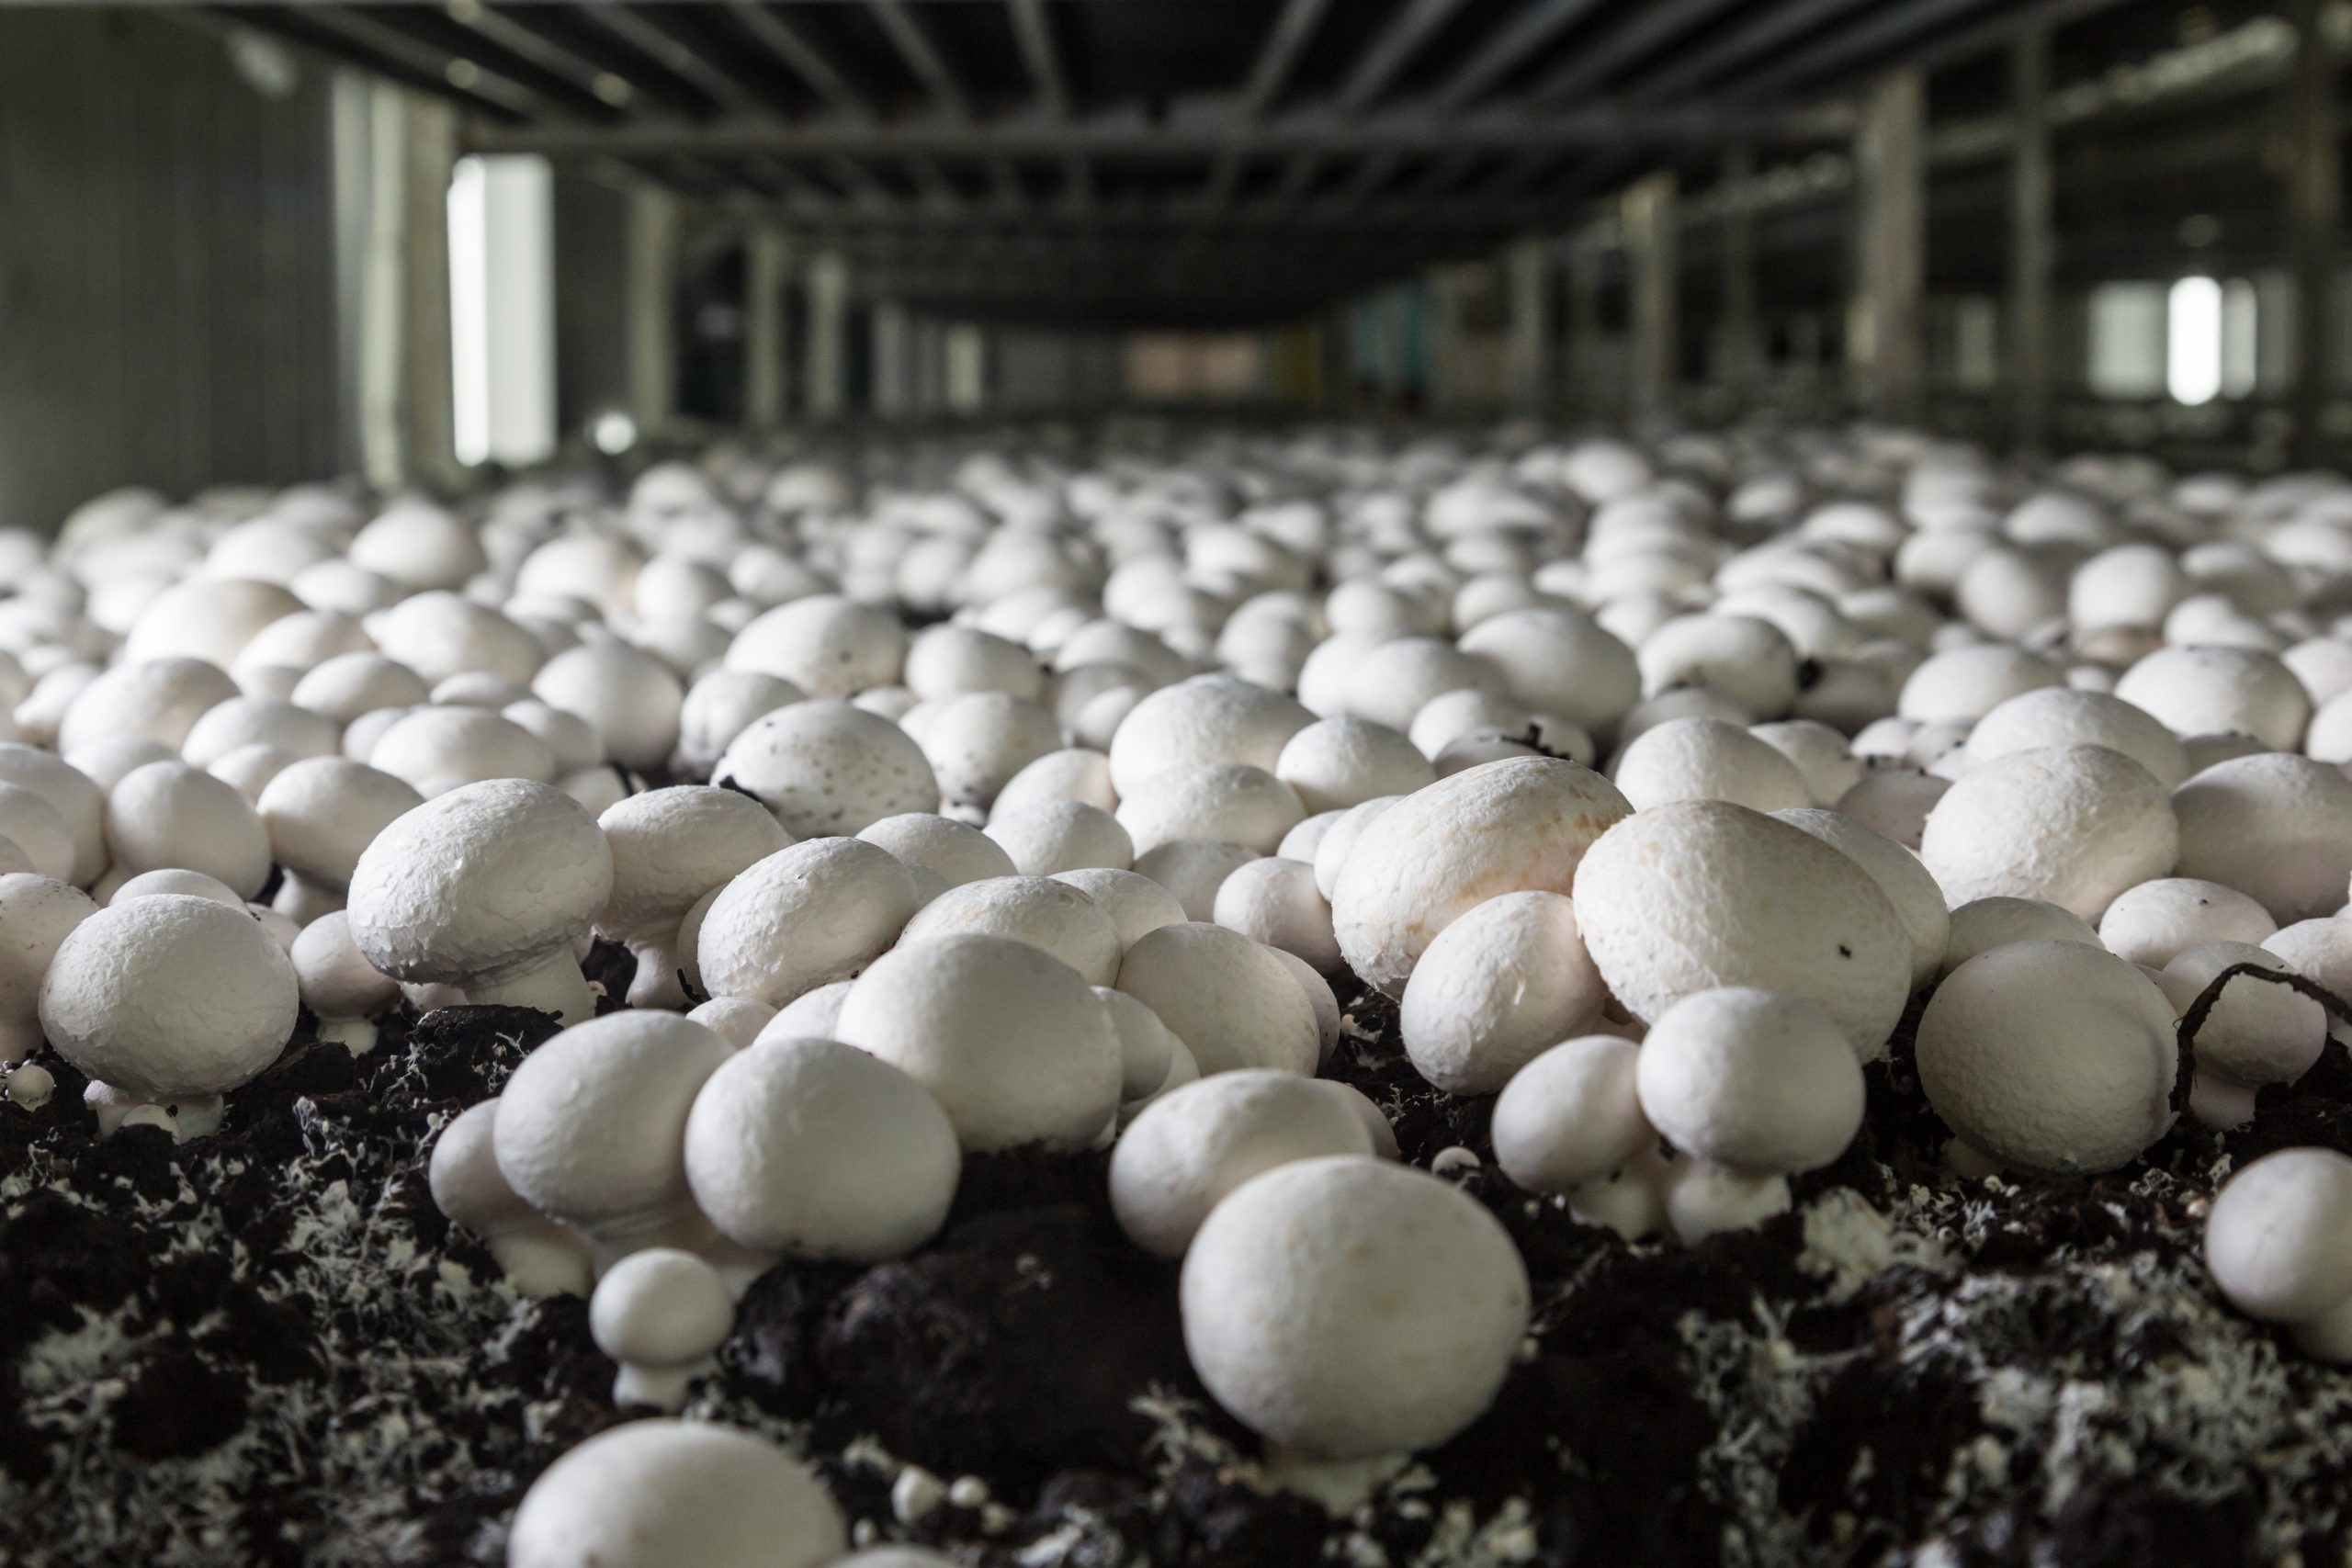 is a mushroom business worth it